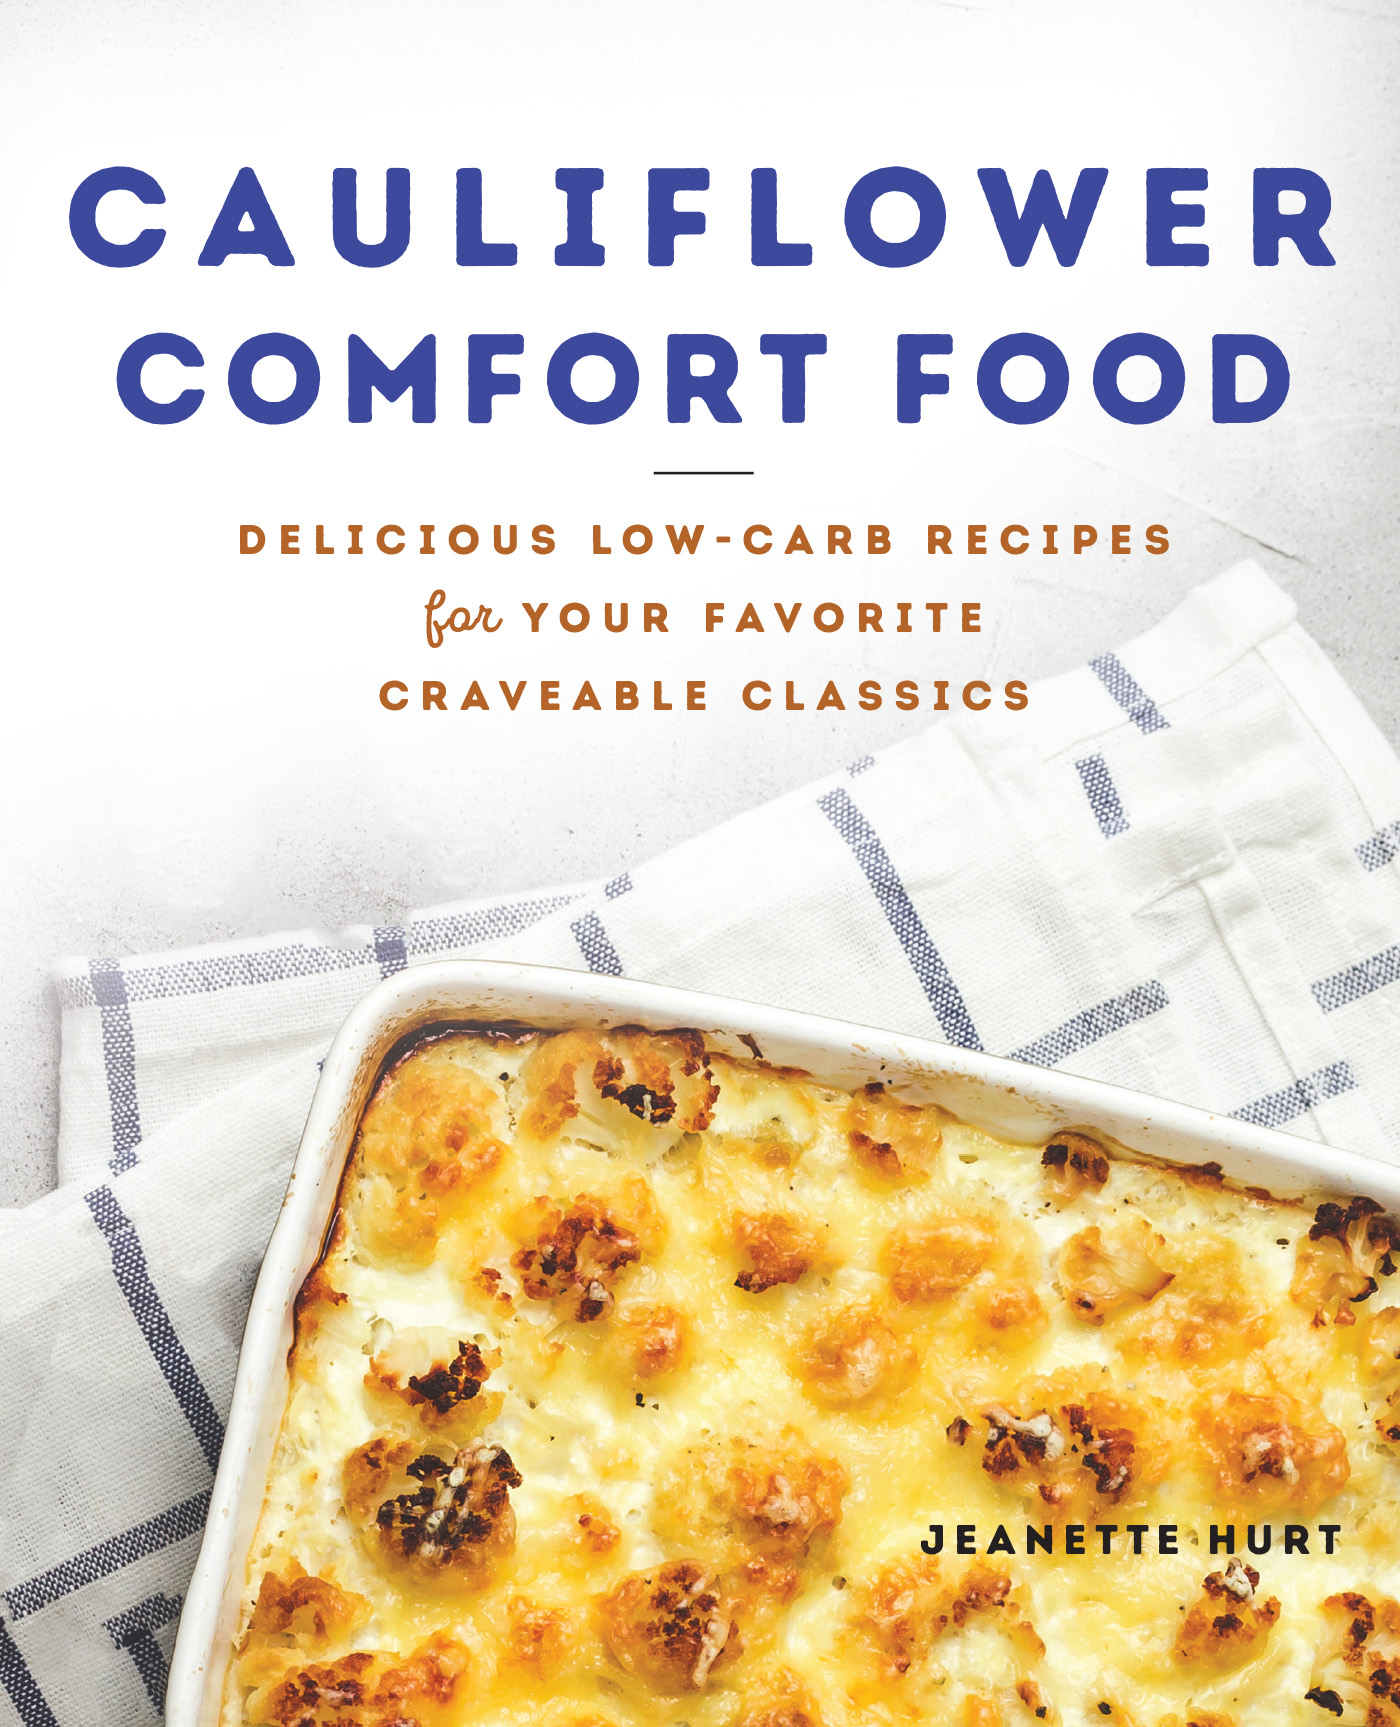 Cauliflower Comfort Food